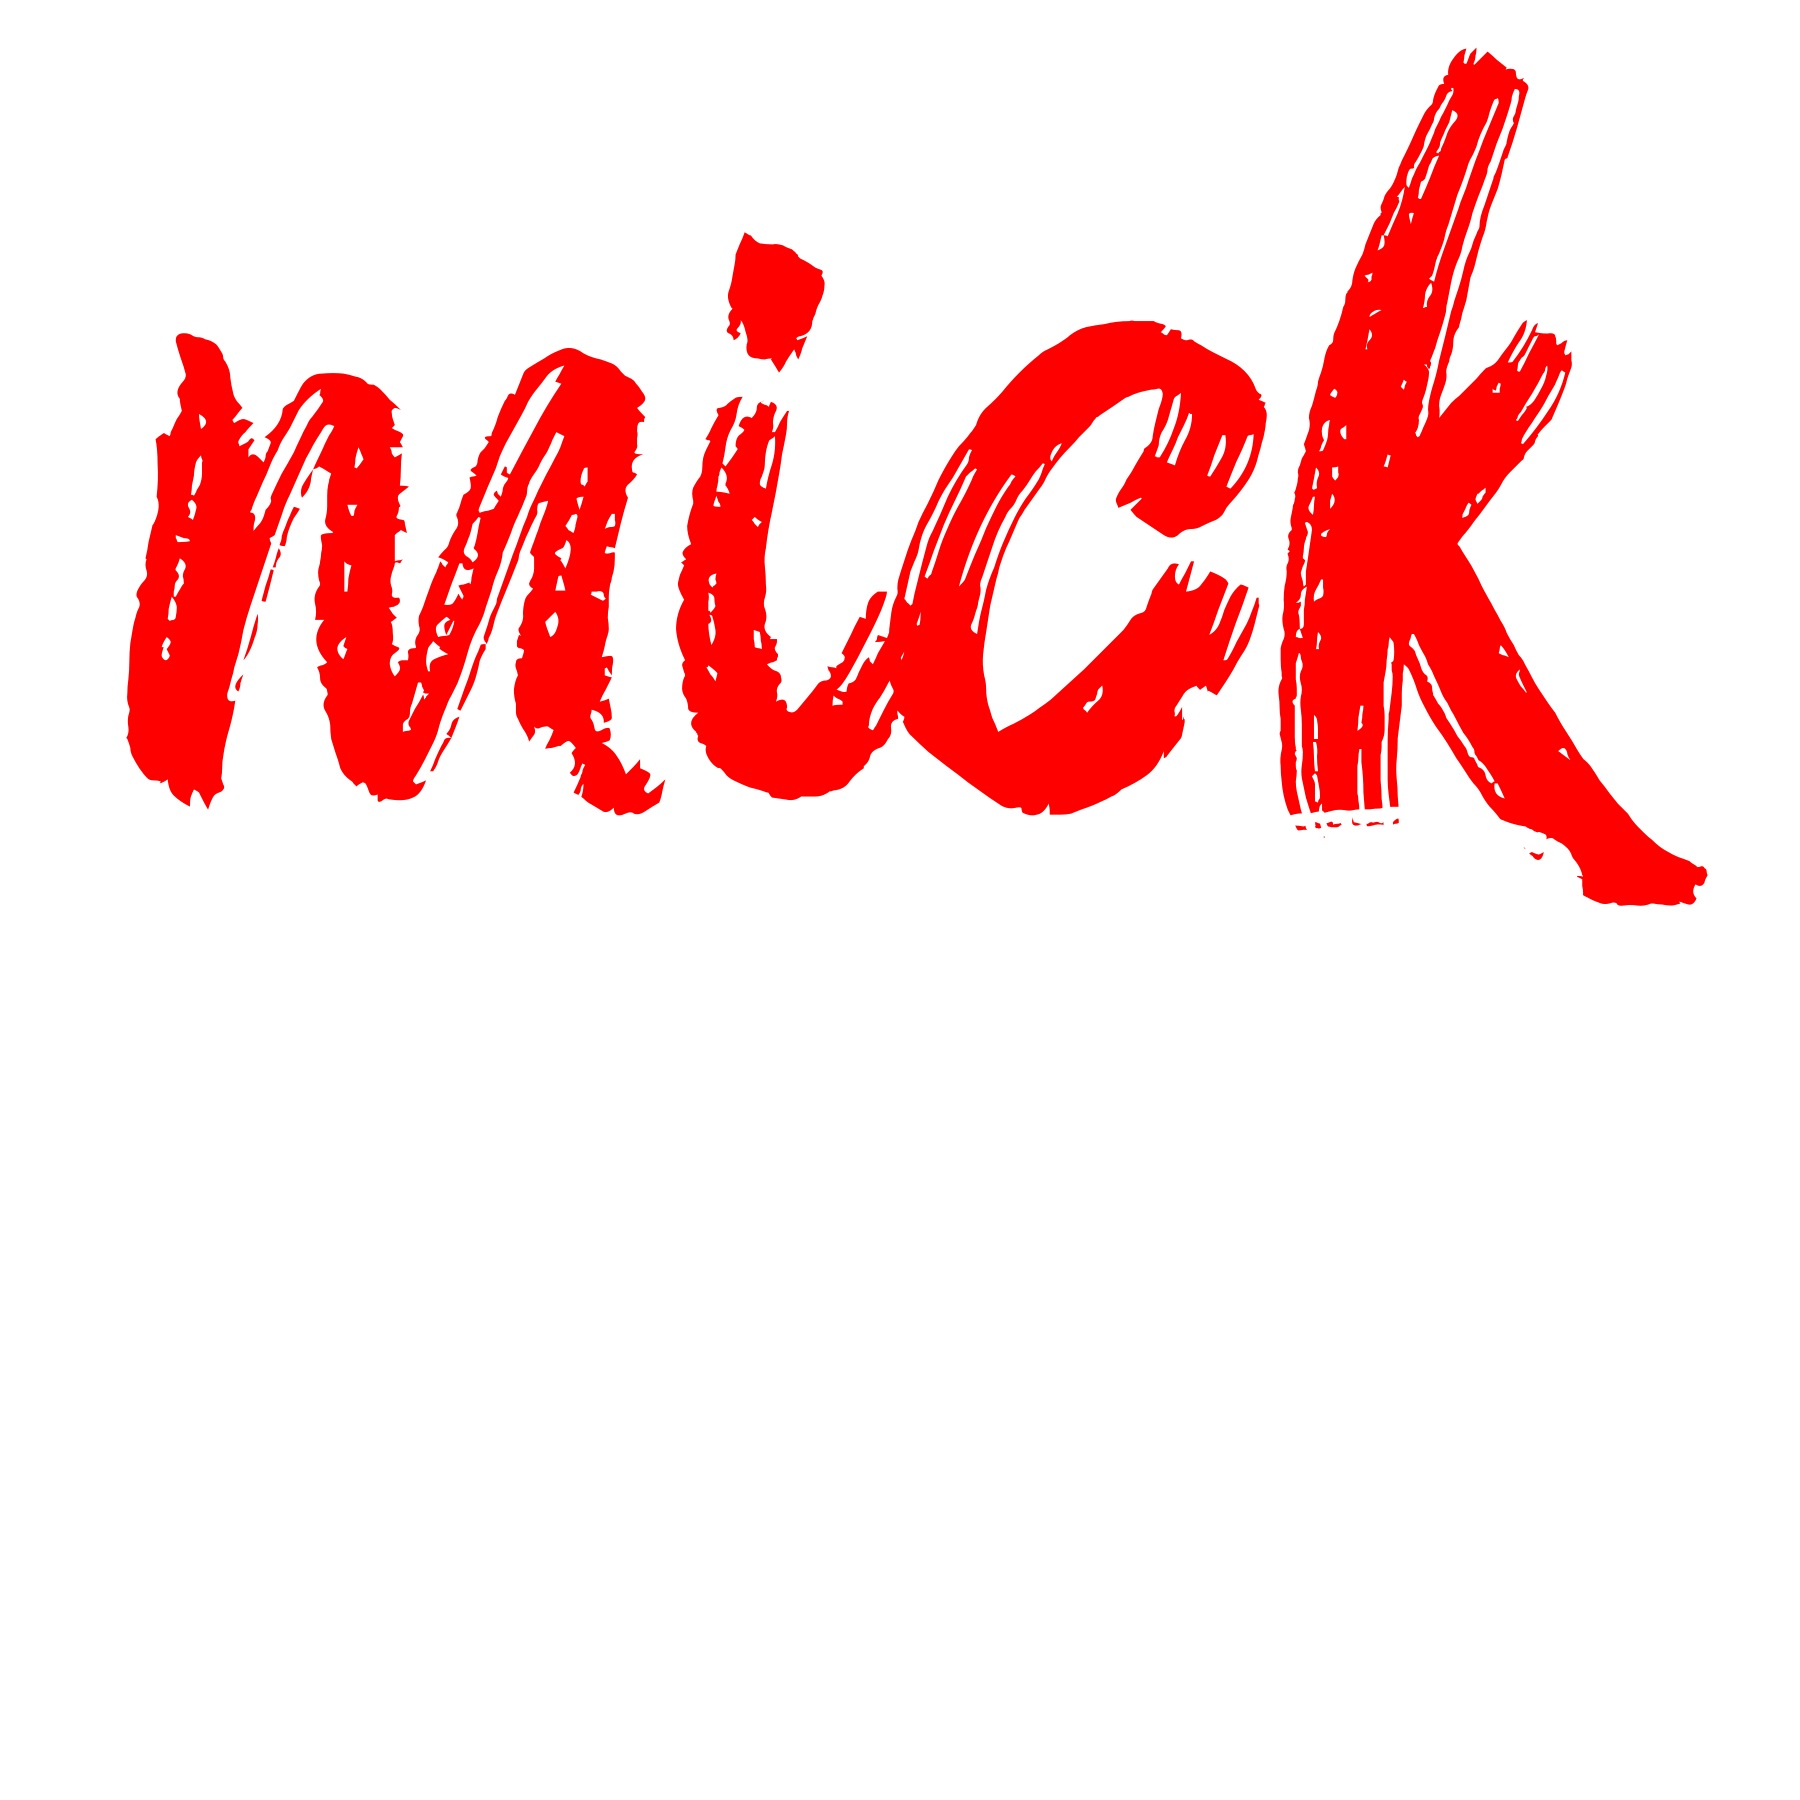 MICK.photo – Professionelle Medienproduktion